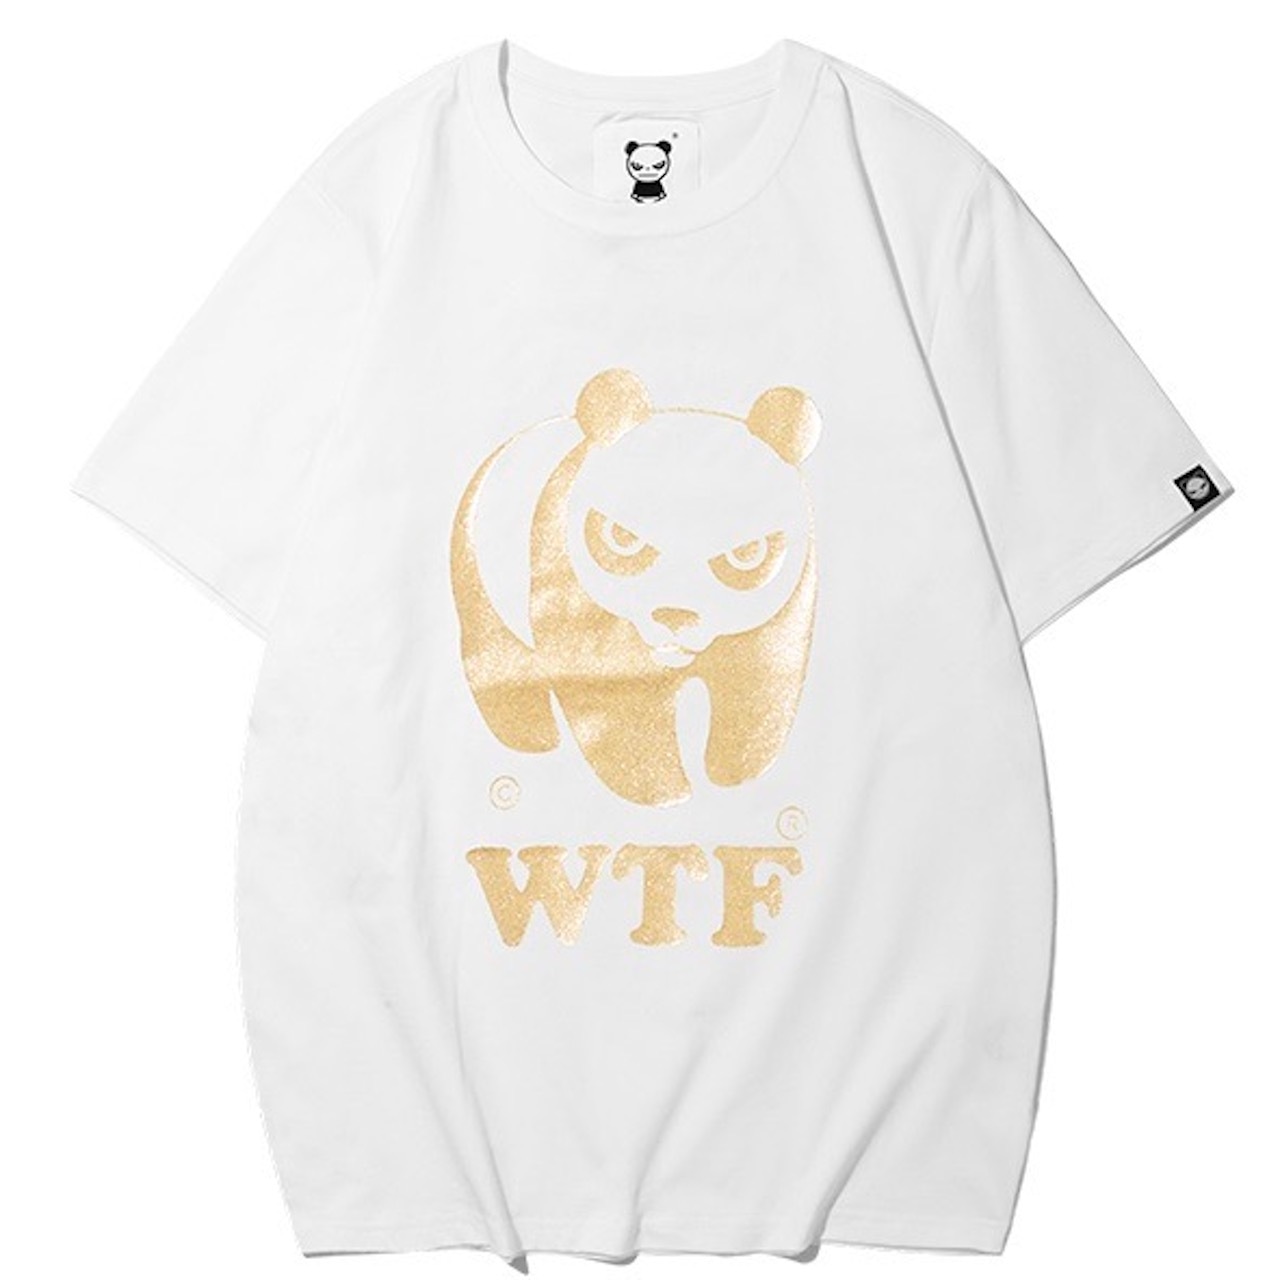 SALE 【HIPANDA ハイパンダ】メンズ WTF ゴールドプリント Tシャツ MEN'S WTF GOLD PRINT SHORT SLEEVED T-SHIRT / WHITE・BLACK